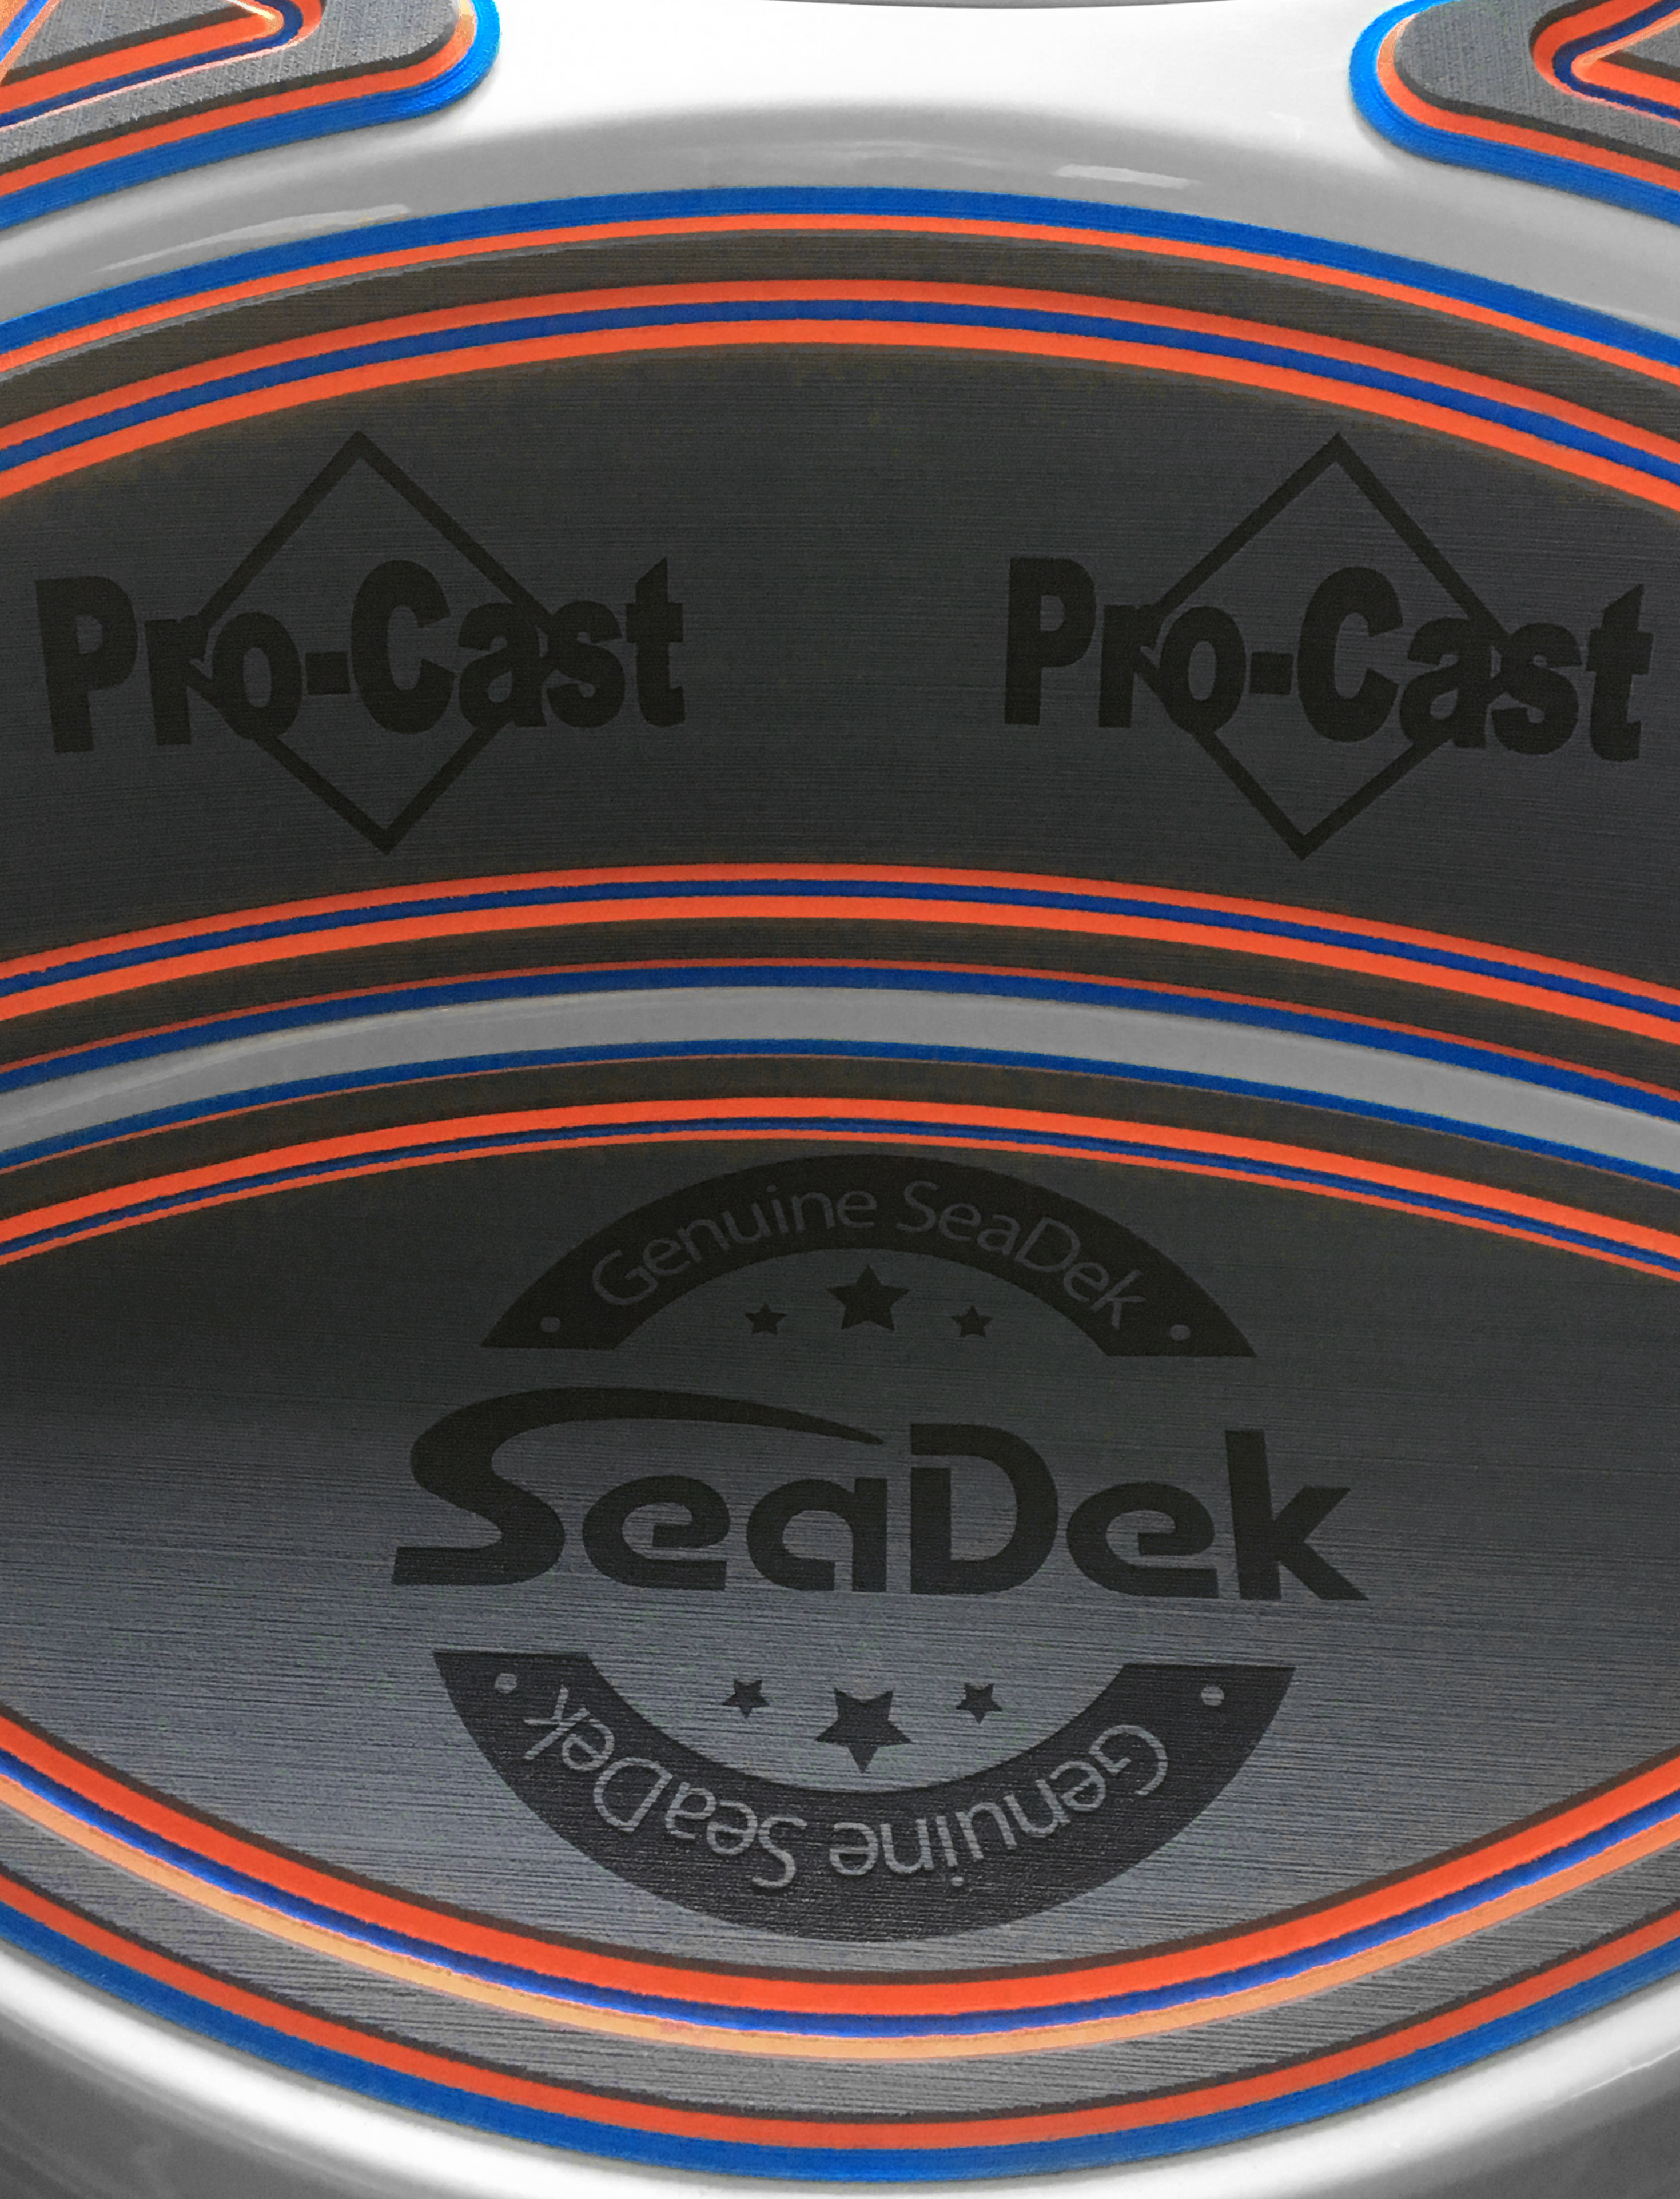 SeaDek Pro-Cast